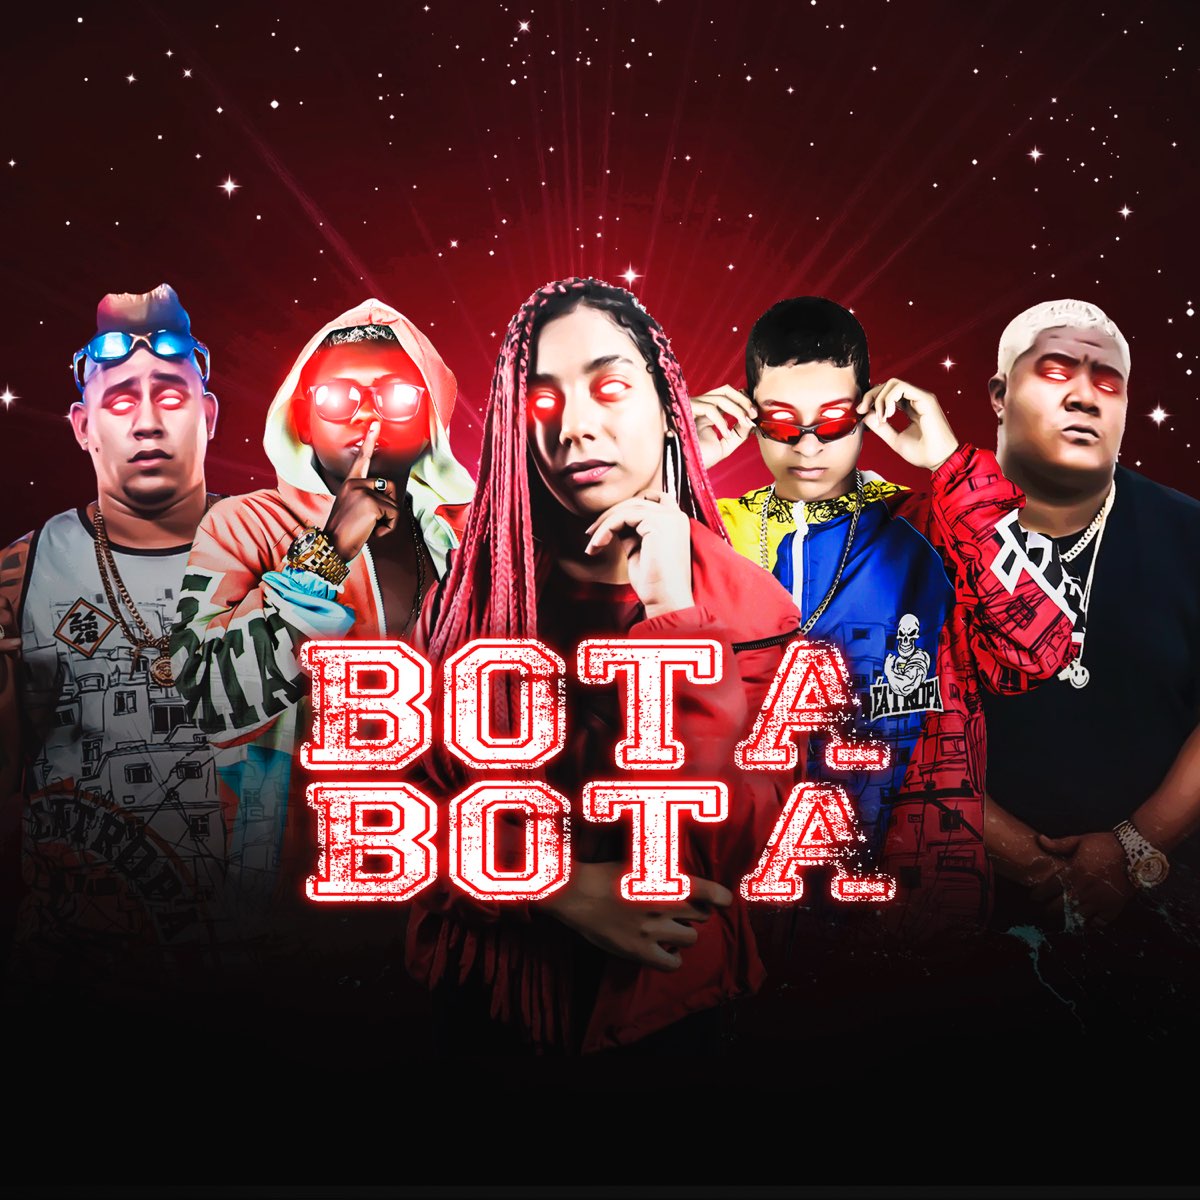 ‎Bota Bota - Single - Album by Shevchenko e Elloco, Mc Losk, MC Morena &  10G - Apple Music